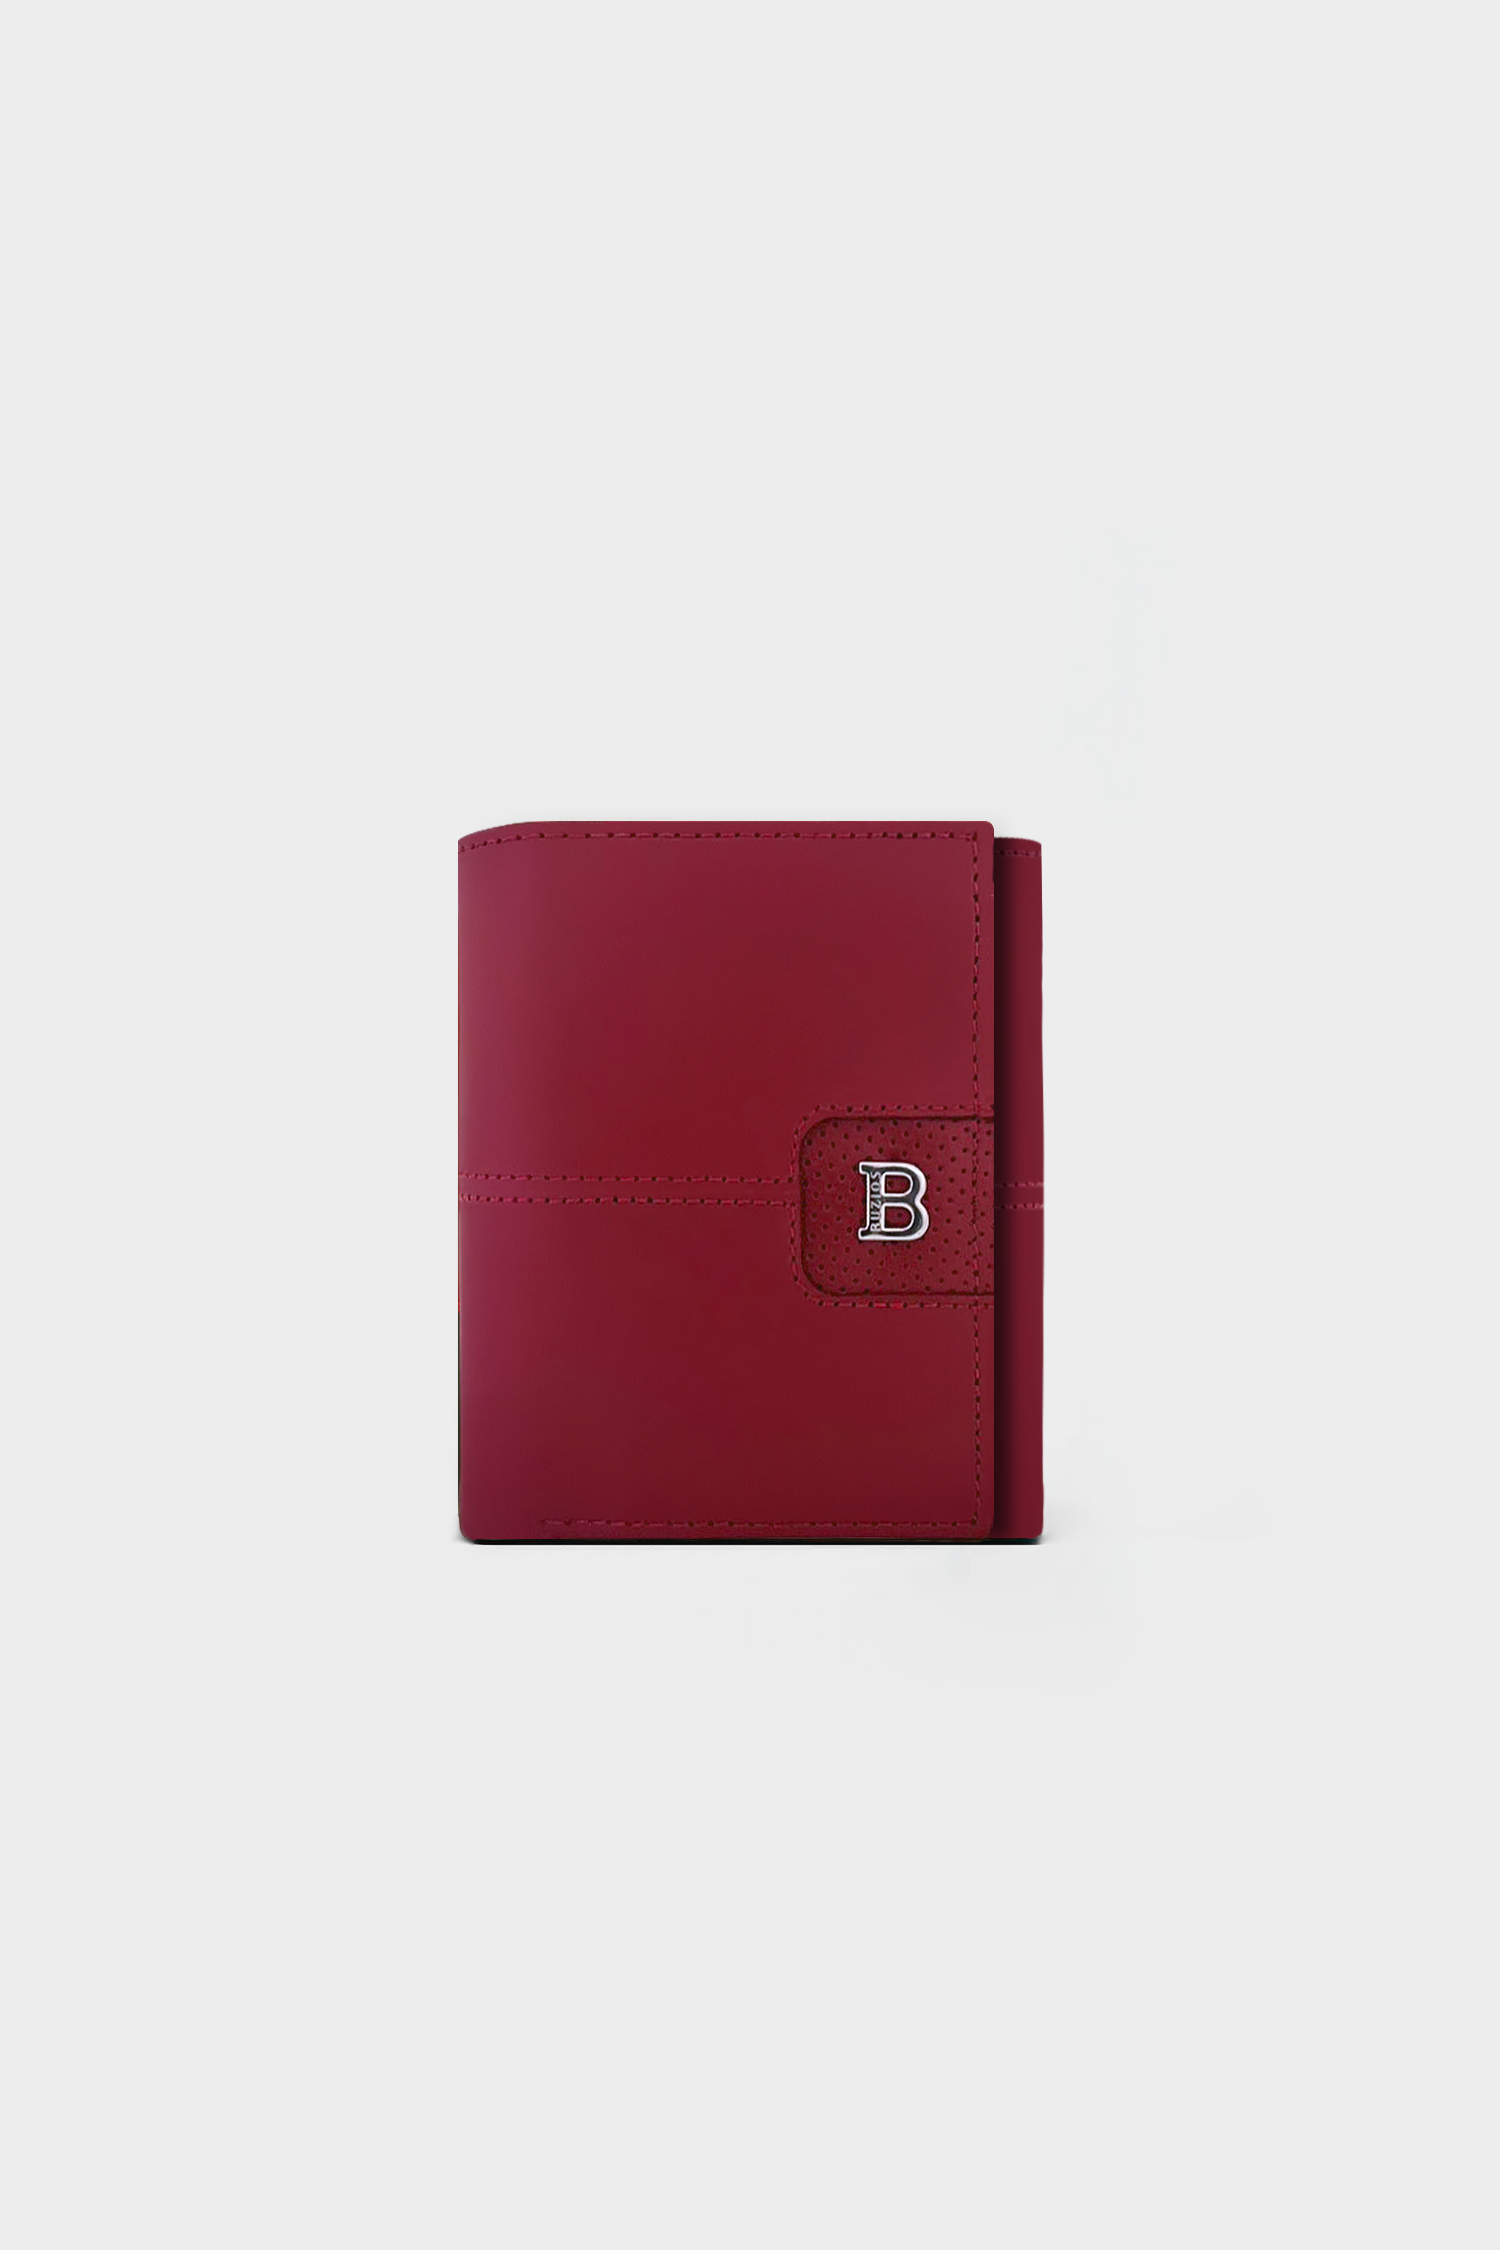 Buzios-capital-trifold-billetera-elegante-rojo